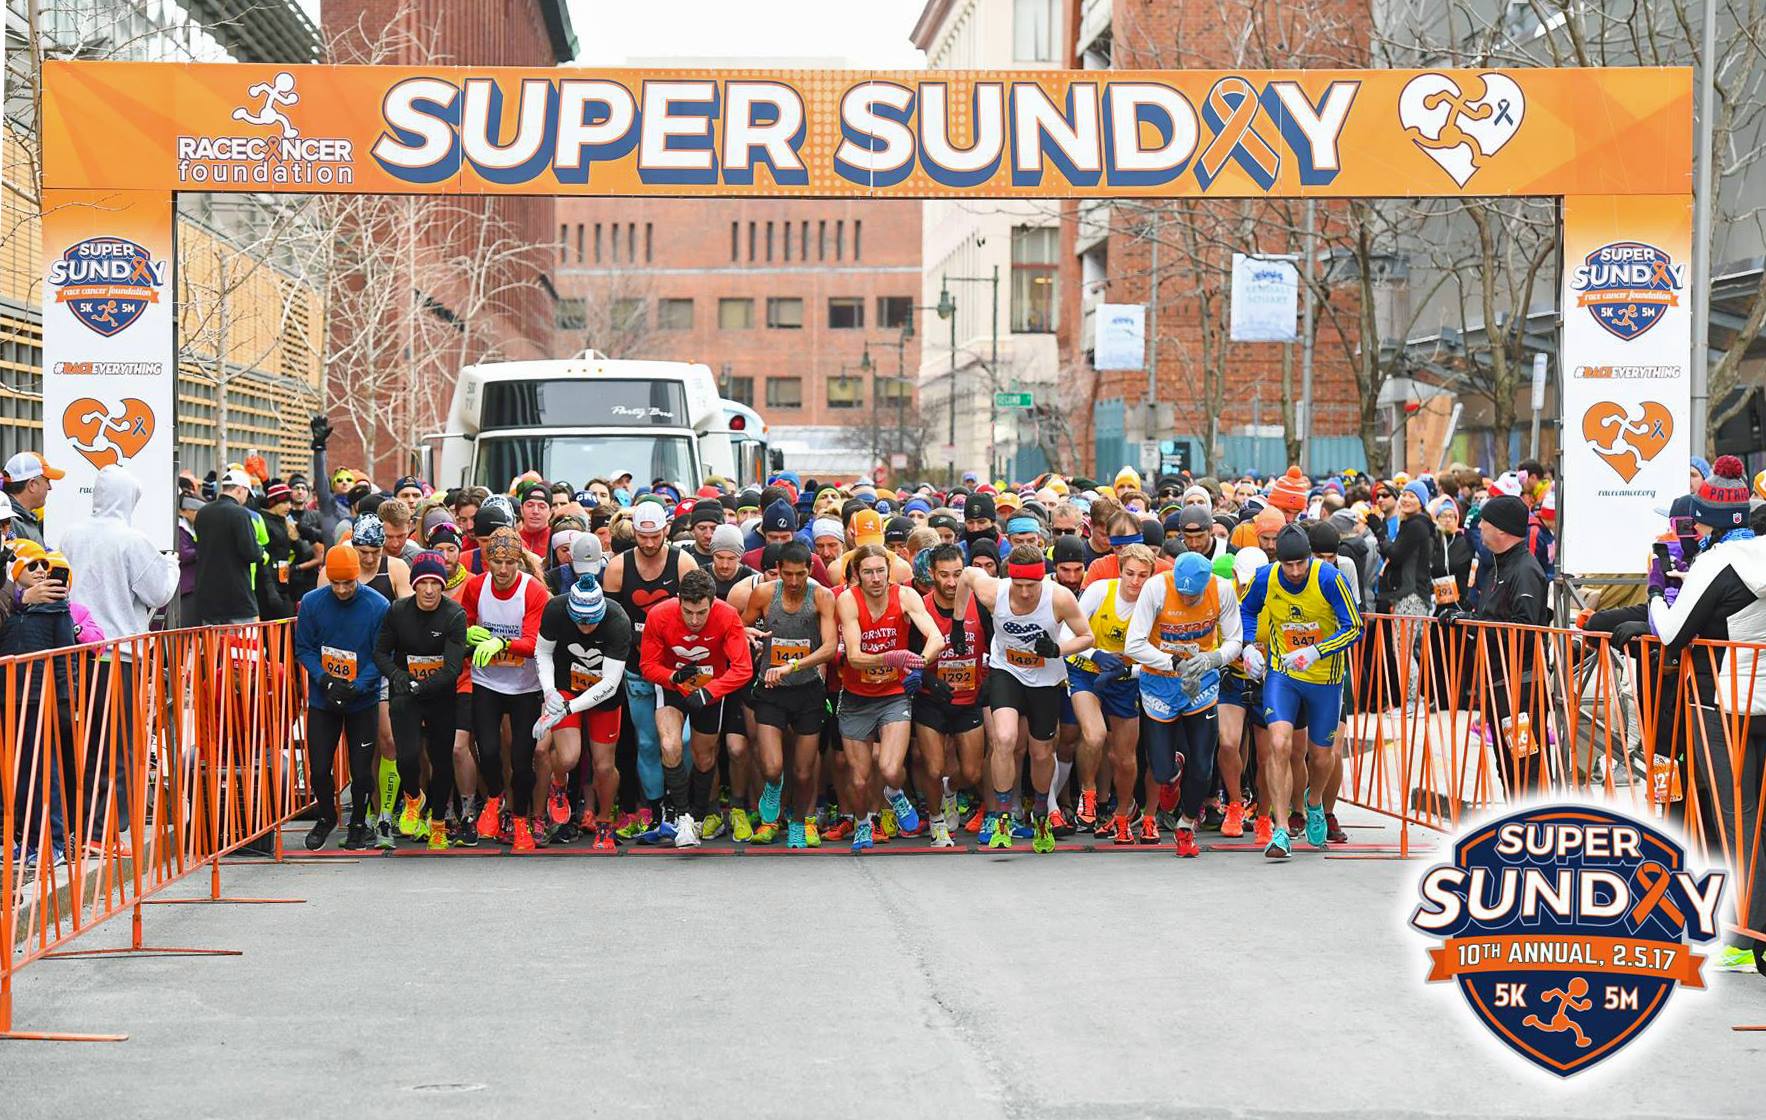 Super Sunday – RACE Cancer Foundation